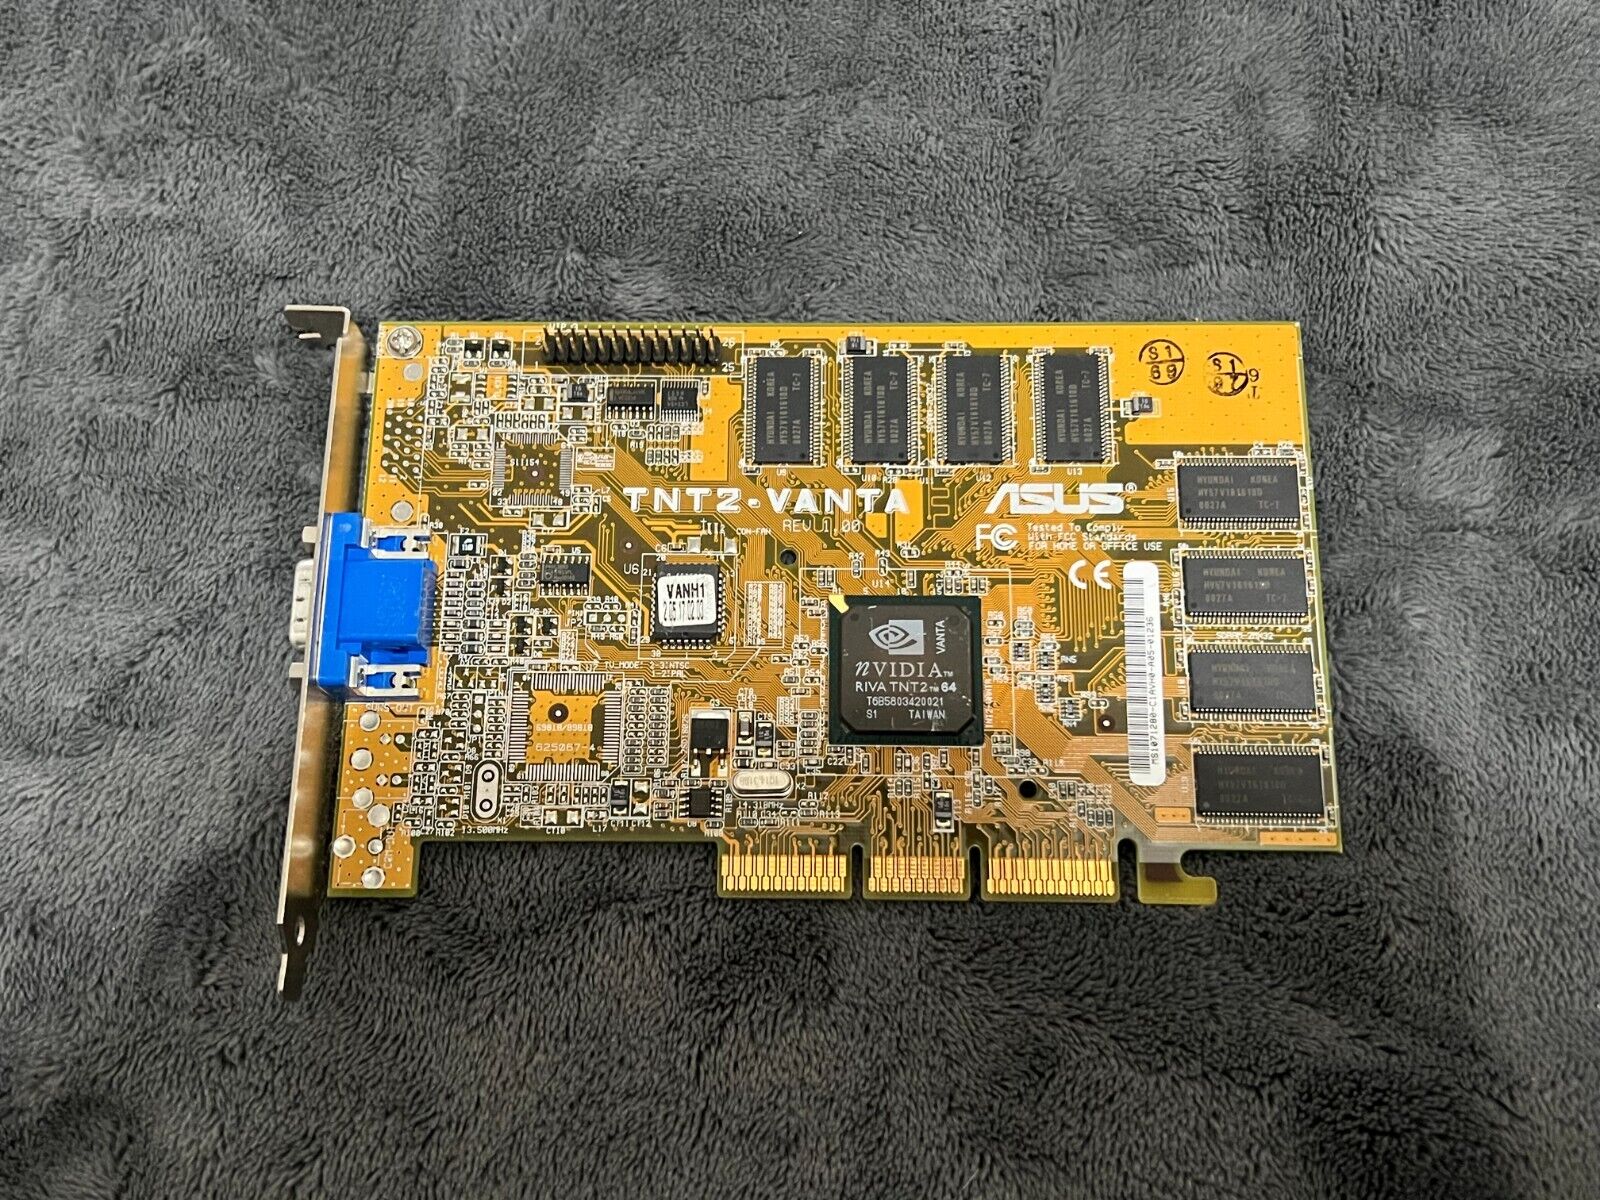 RARE ASUS Nvidia RIVA TNT2 - VANTA 64 AGP 16MB Video Graphics Card GPU VGA